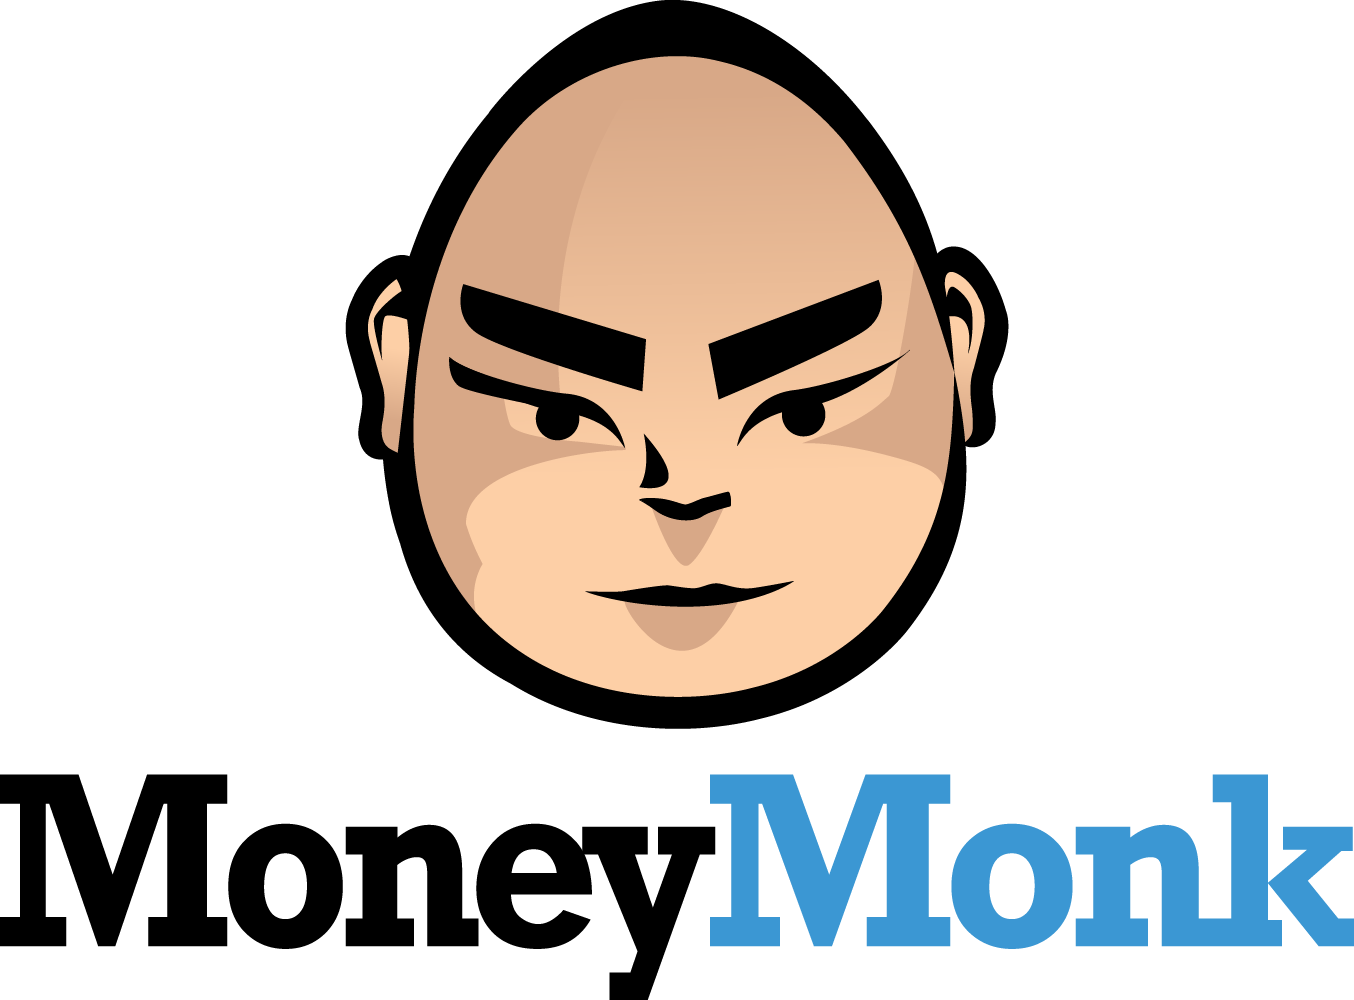 Moneymonk logo